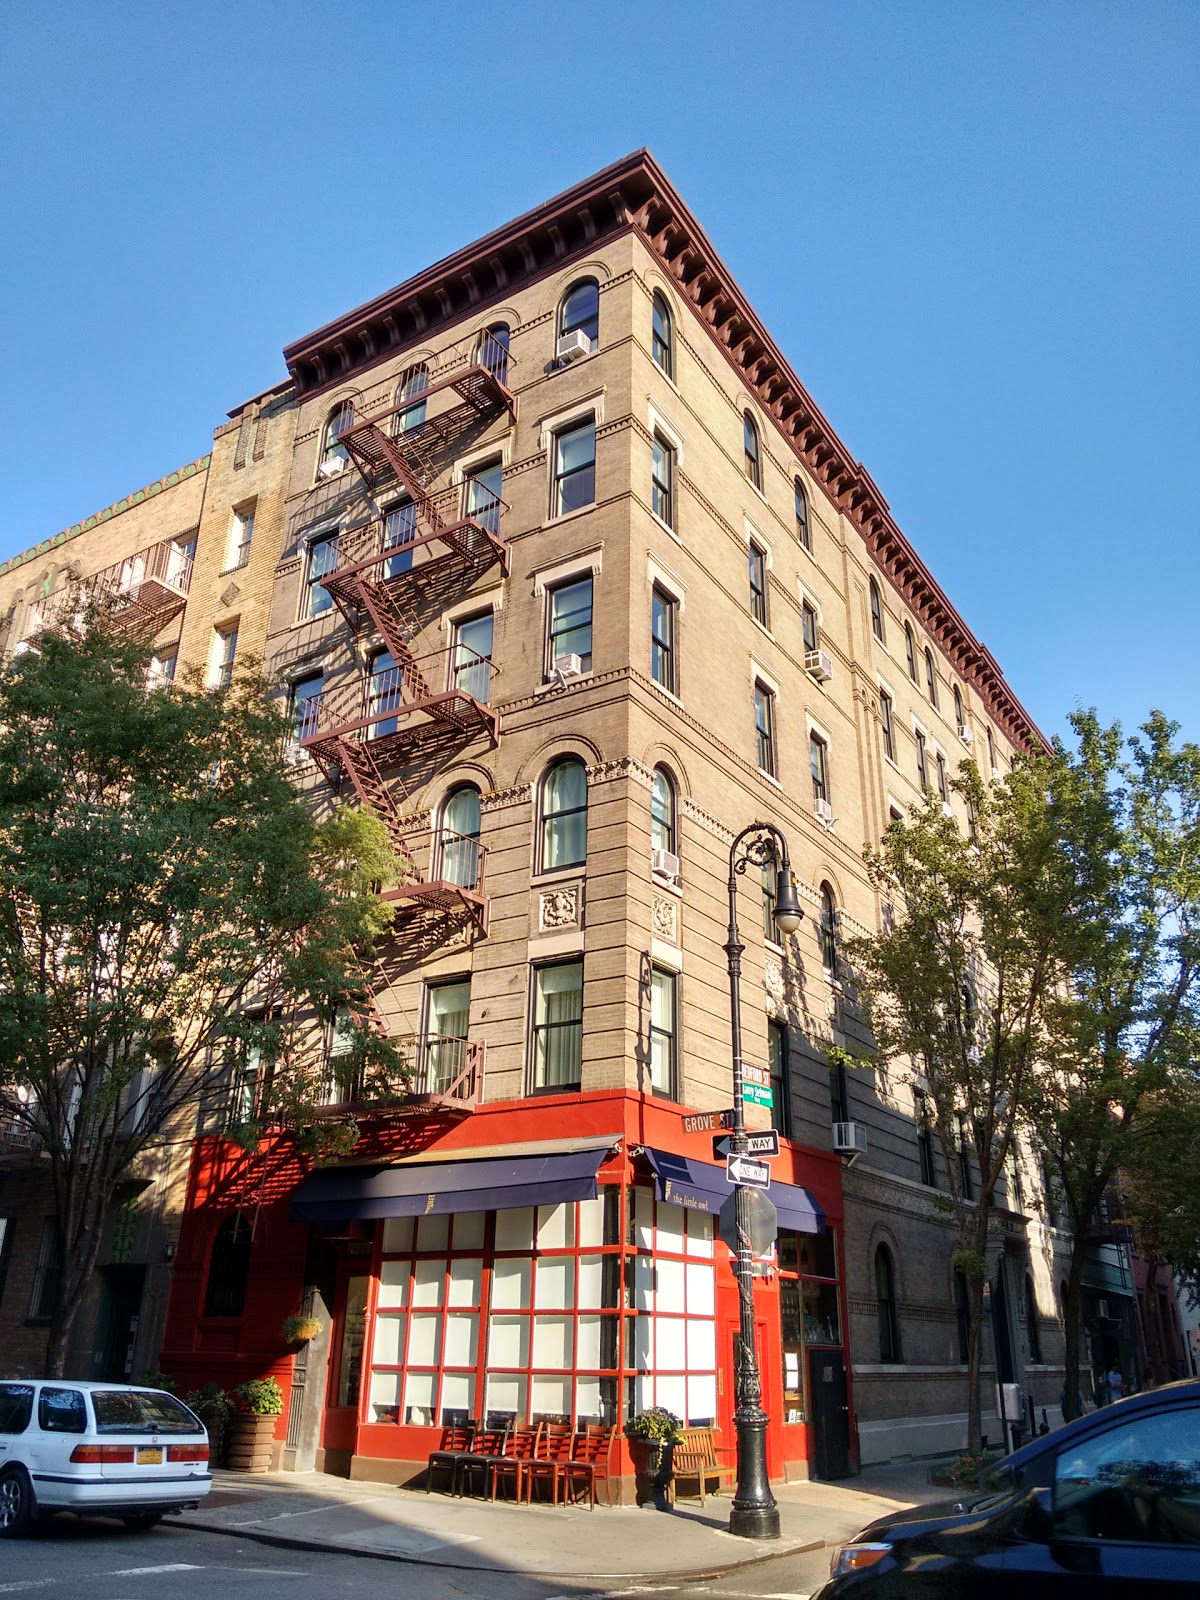 Photo of Edificio Friends in New York City, New York, United States - 2 Picture of Point of interest, Establishment